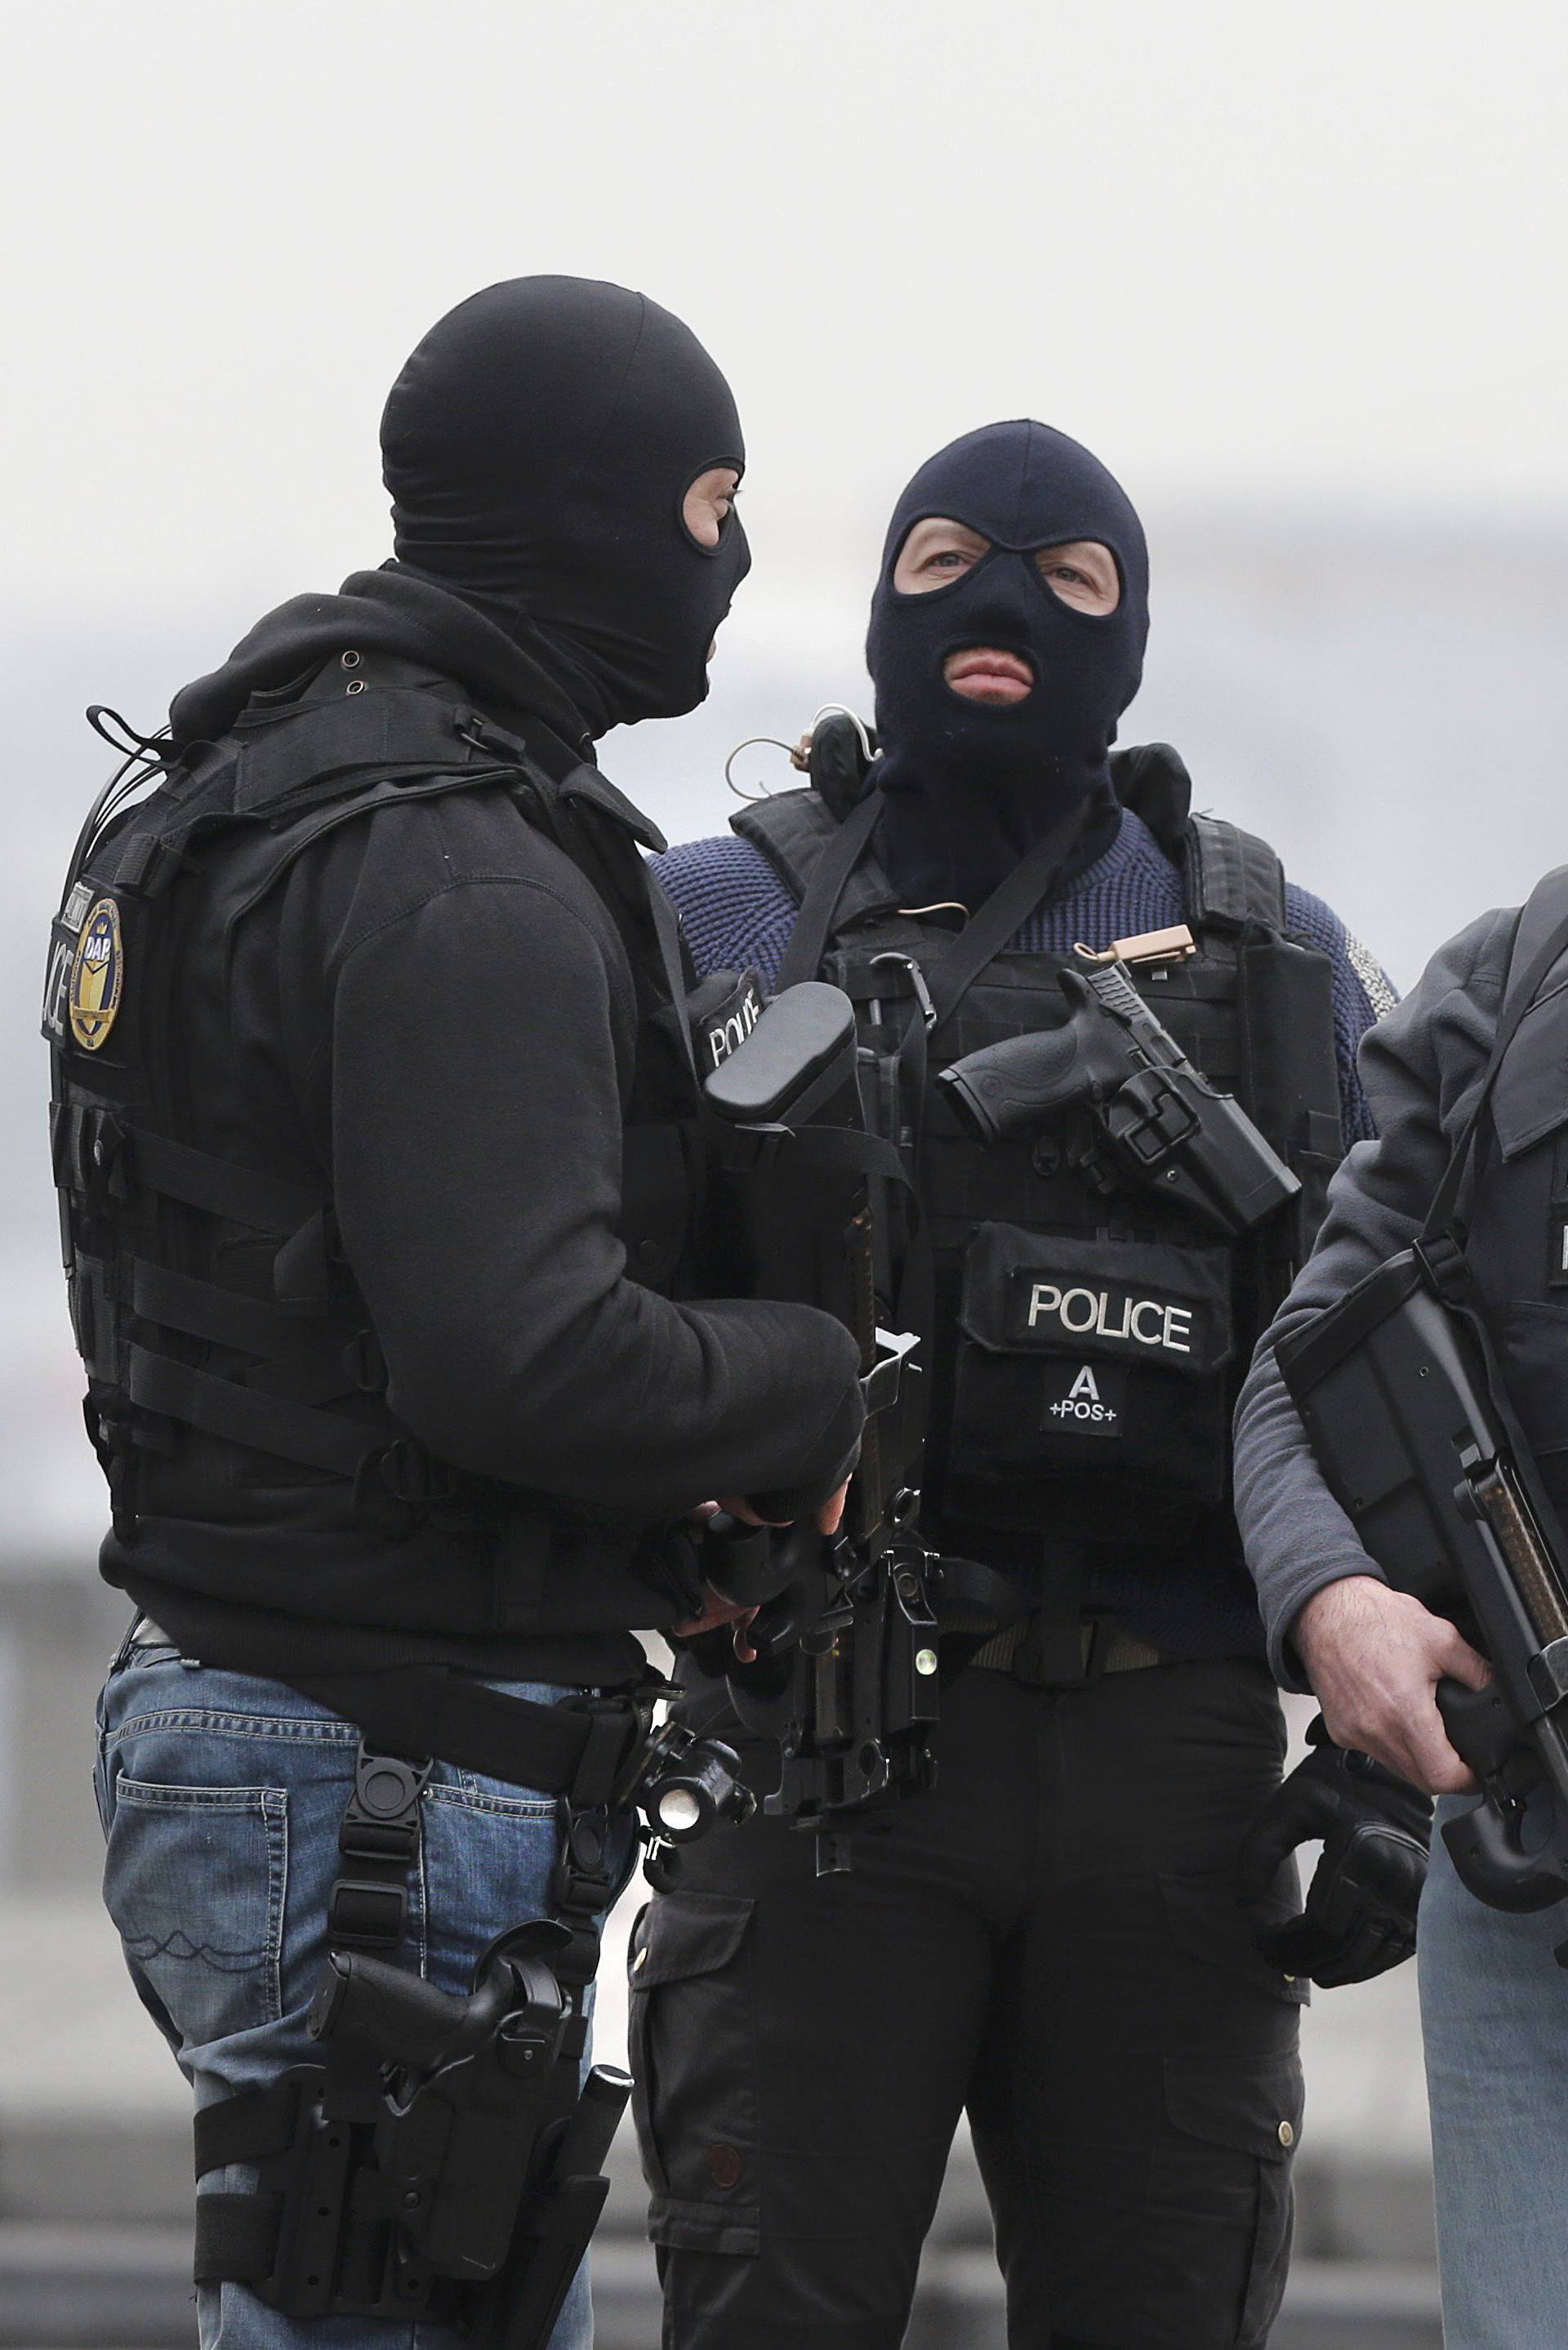 Salah šuti, a DNK bombaša iz Bruxellesa našli u Bataclanu